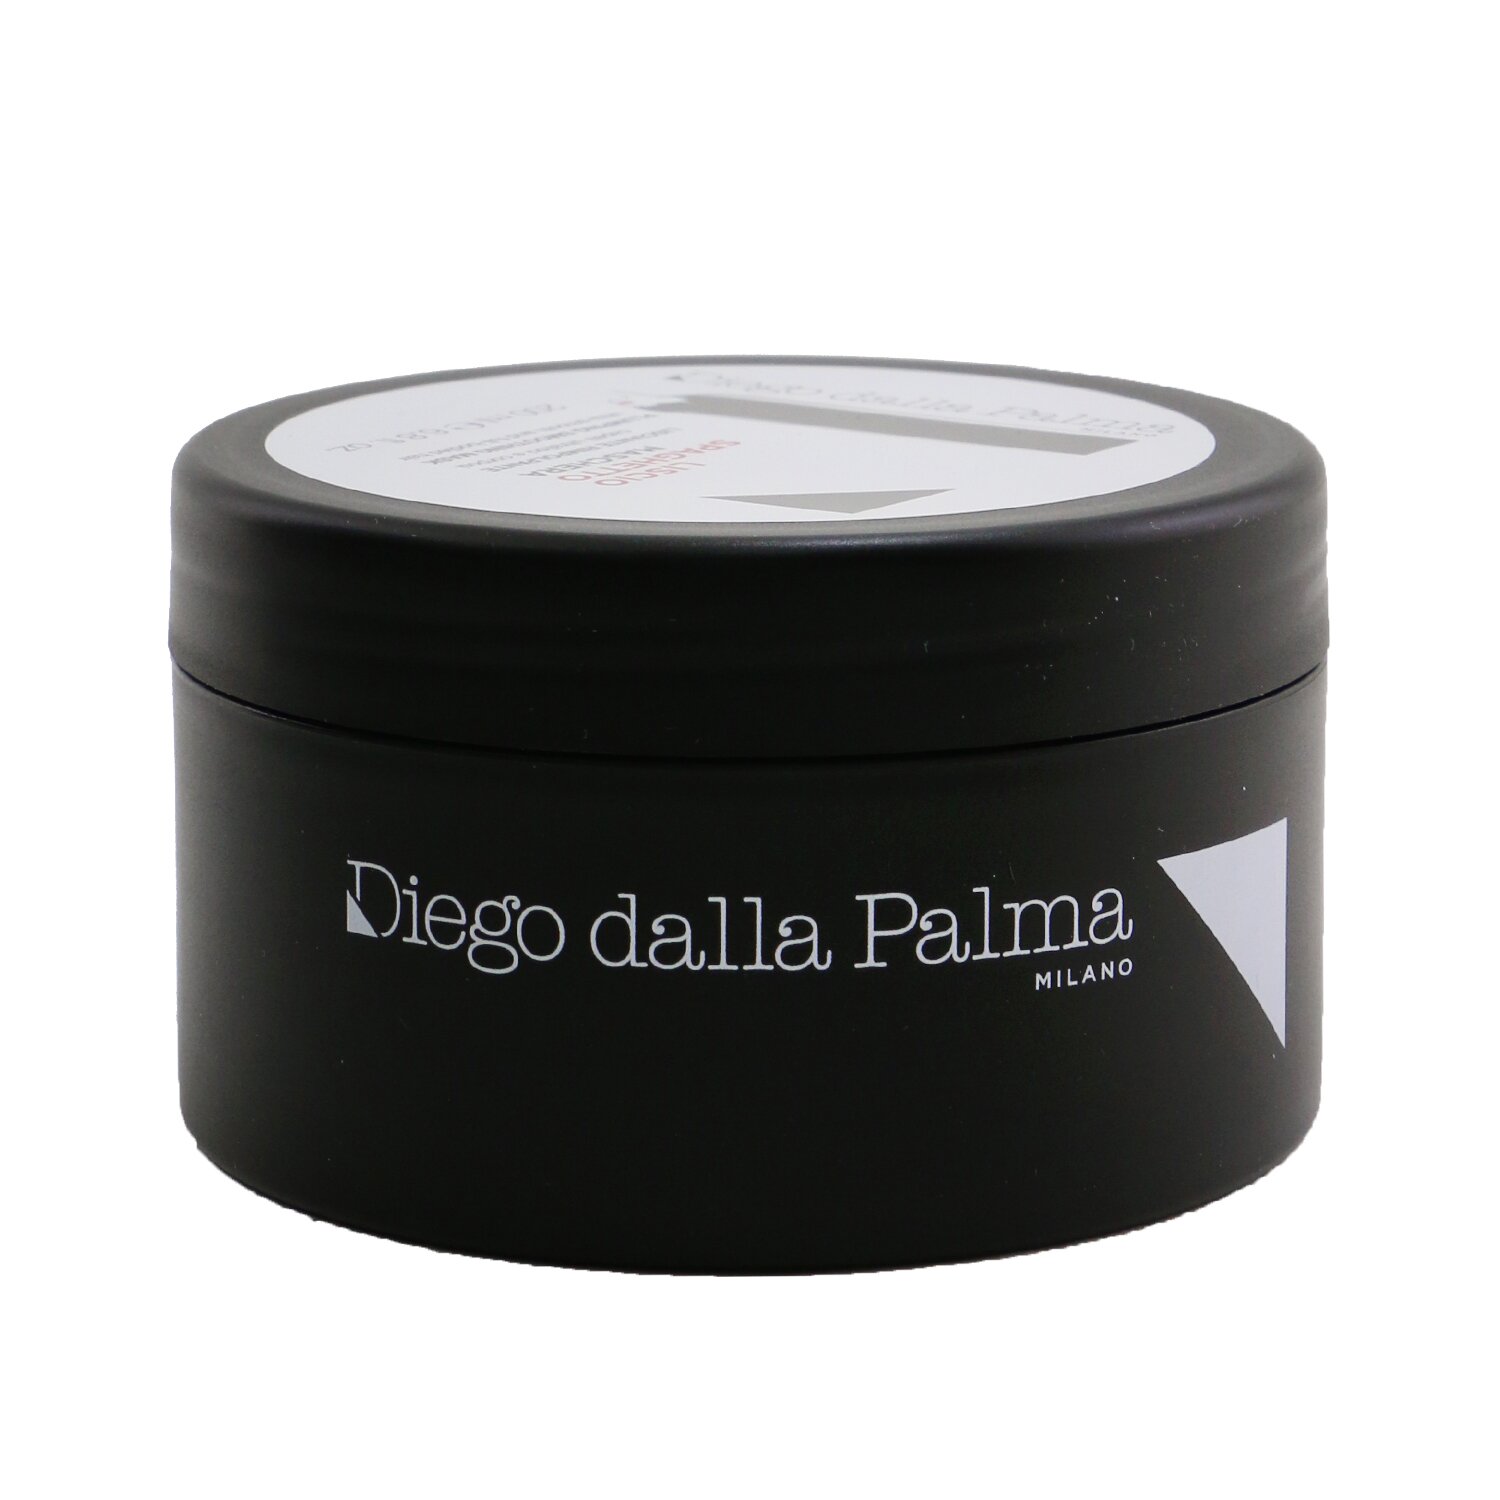 Diego Dalla Palma Lisciospaghetto Shampoo Lisciante Rimpolpante 250Ml